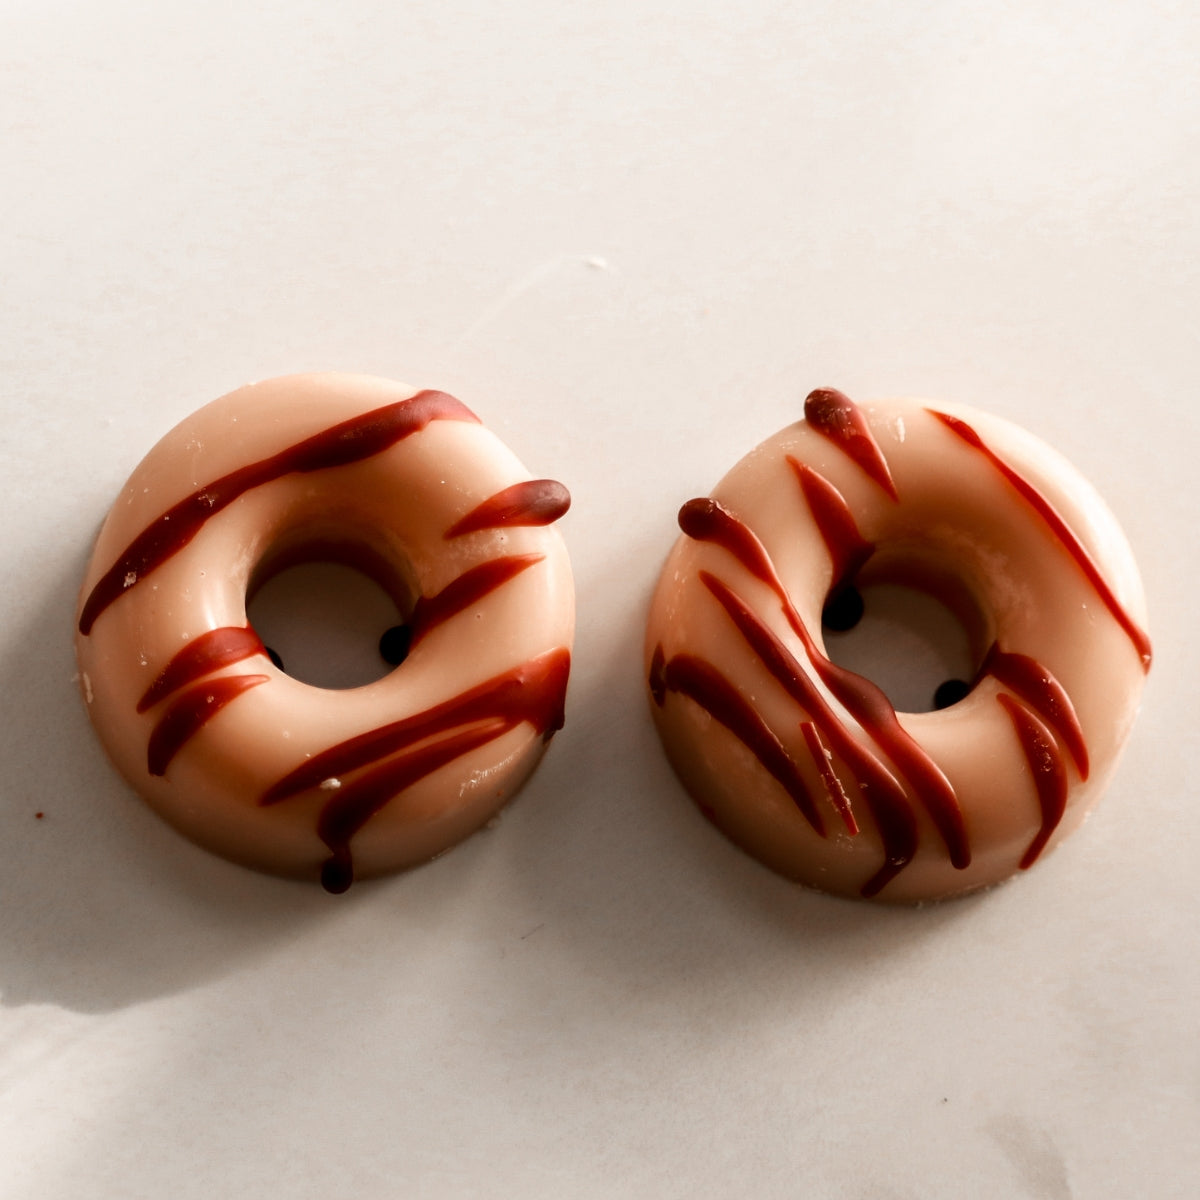 Cozybox Donuts Wax Melts Vanilla & Caramel από Κερί Eλαιοκράμβης